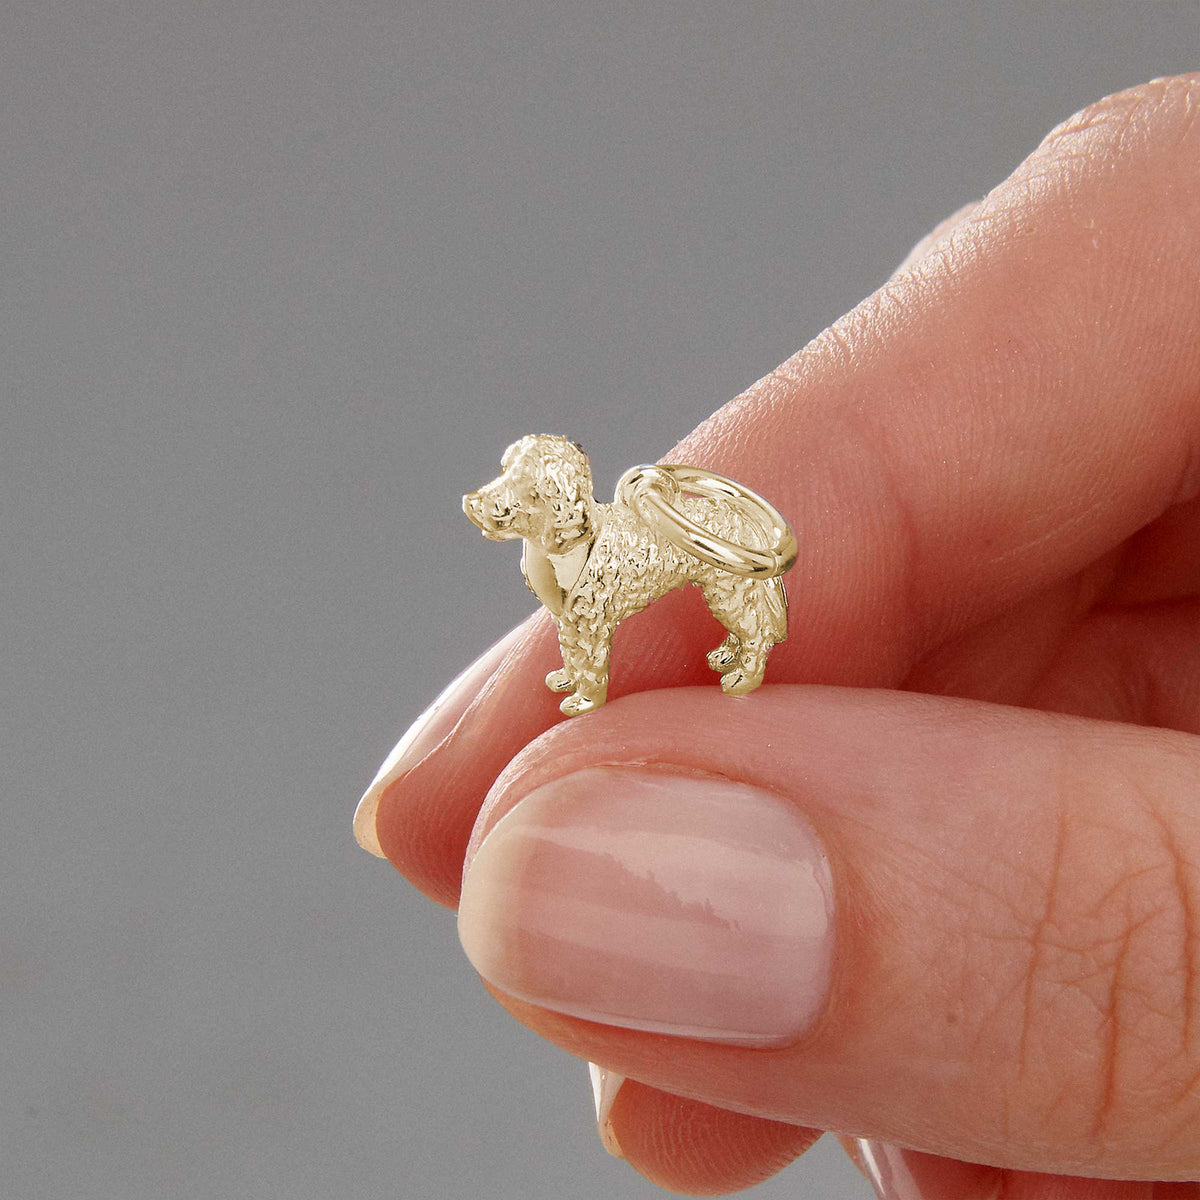 Solid gold labradoodle bracelet charm 9k 9ct gold dog charms scarlett jewellery